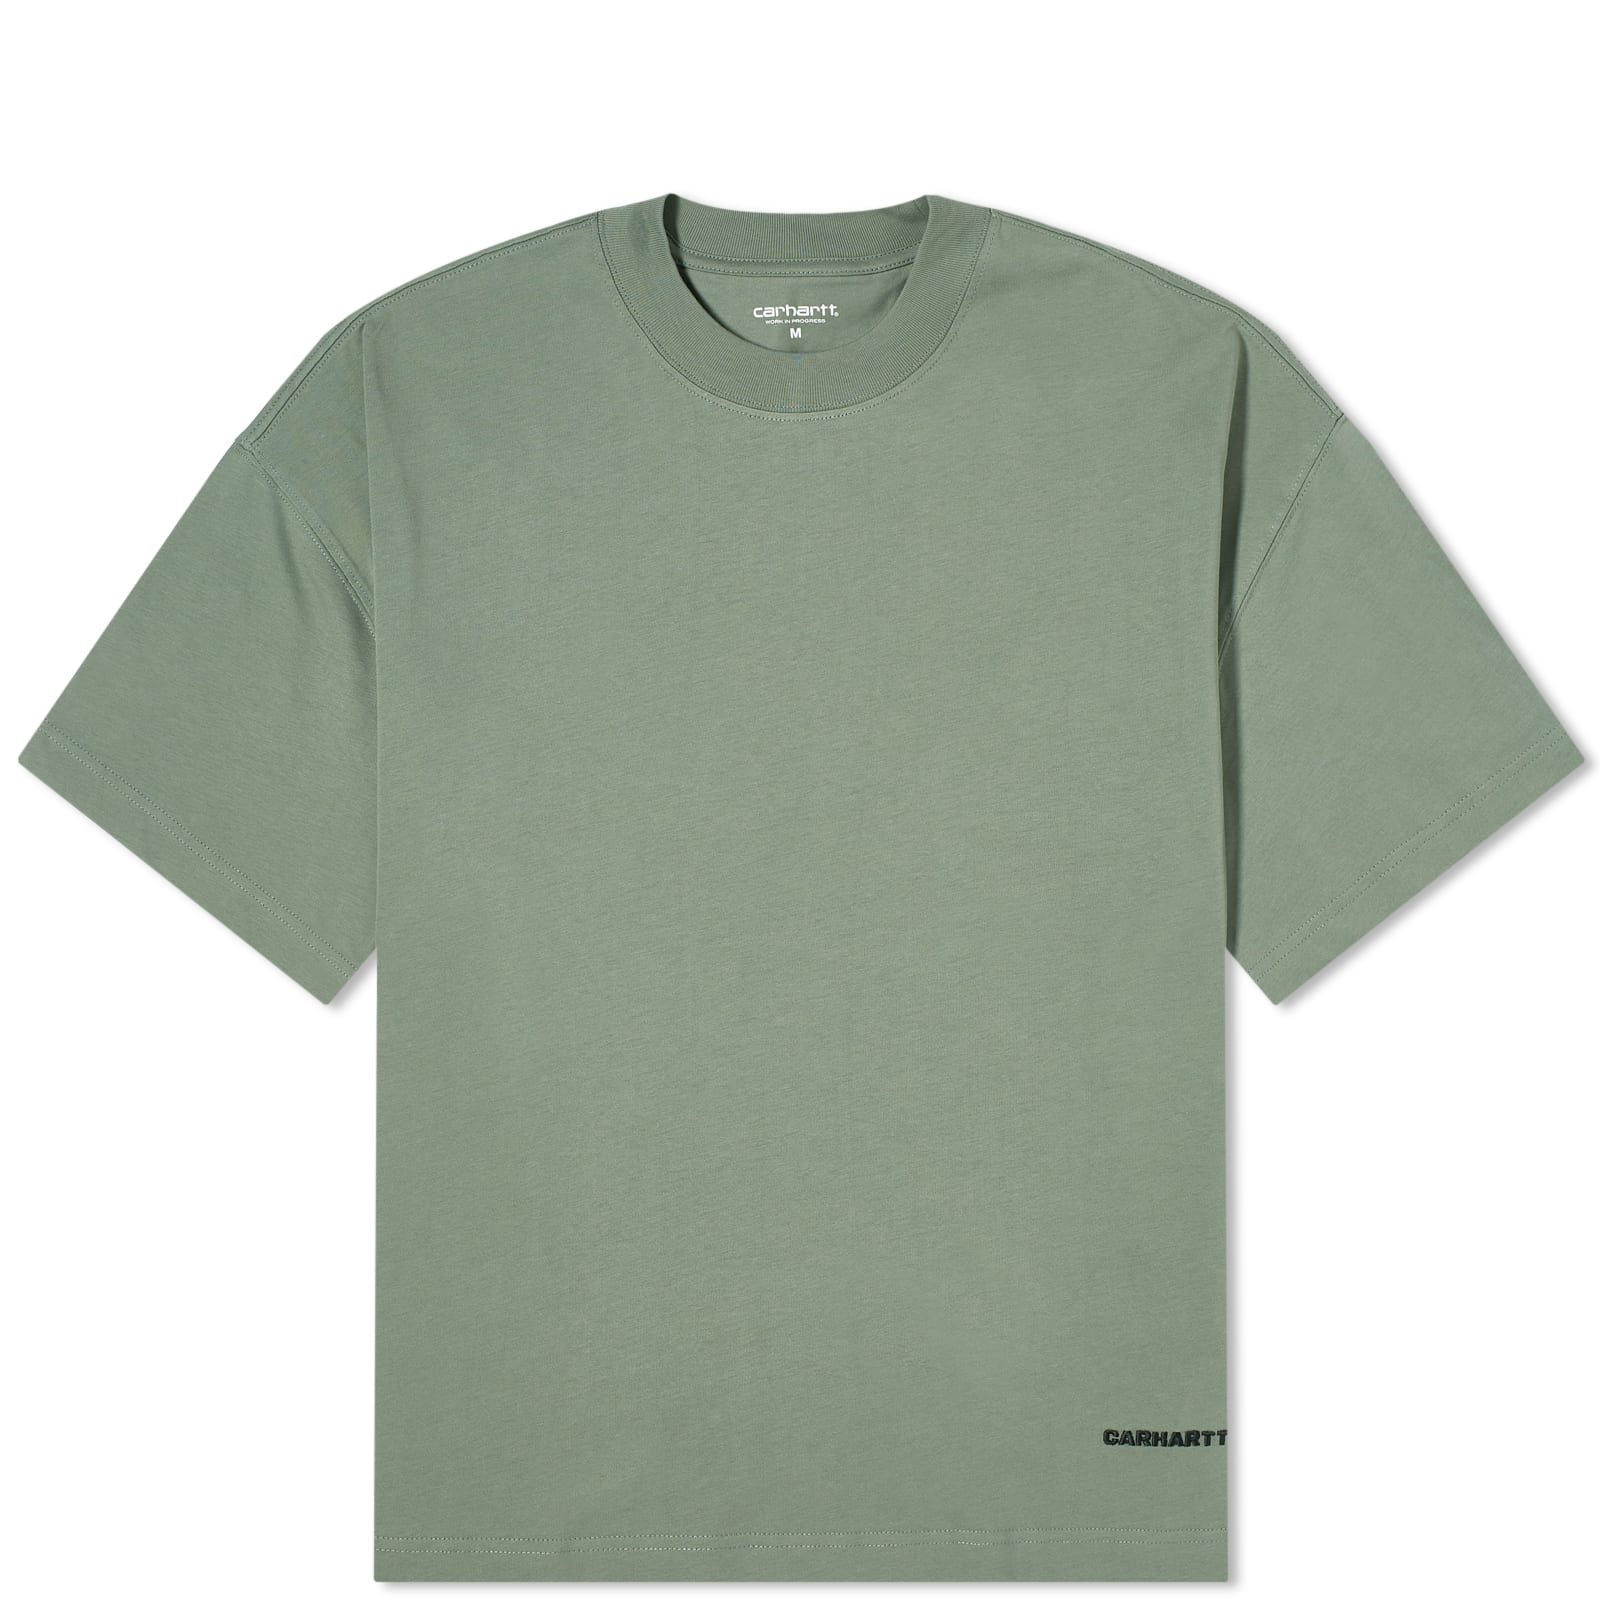 Футболка Carhartt Wip Link Script, зеленый футболка carhartt wip script embroidery белый